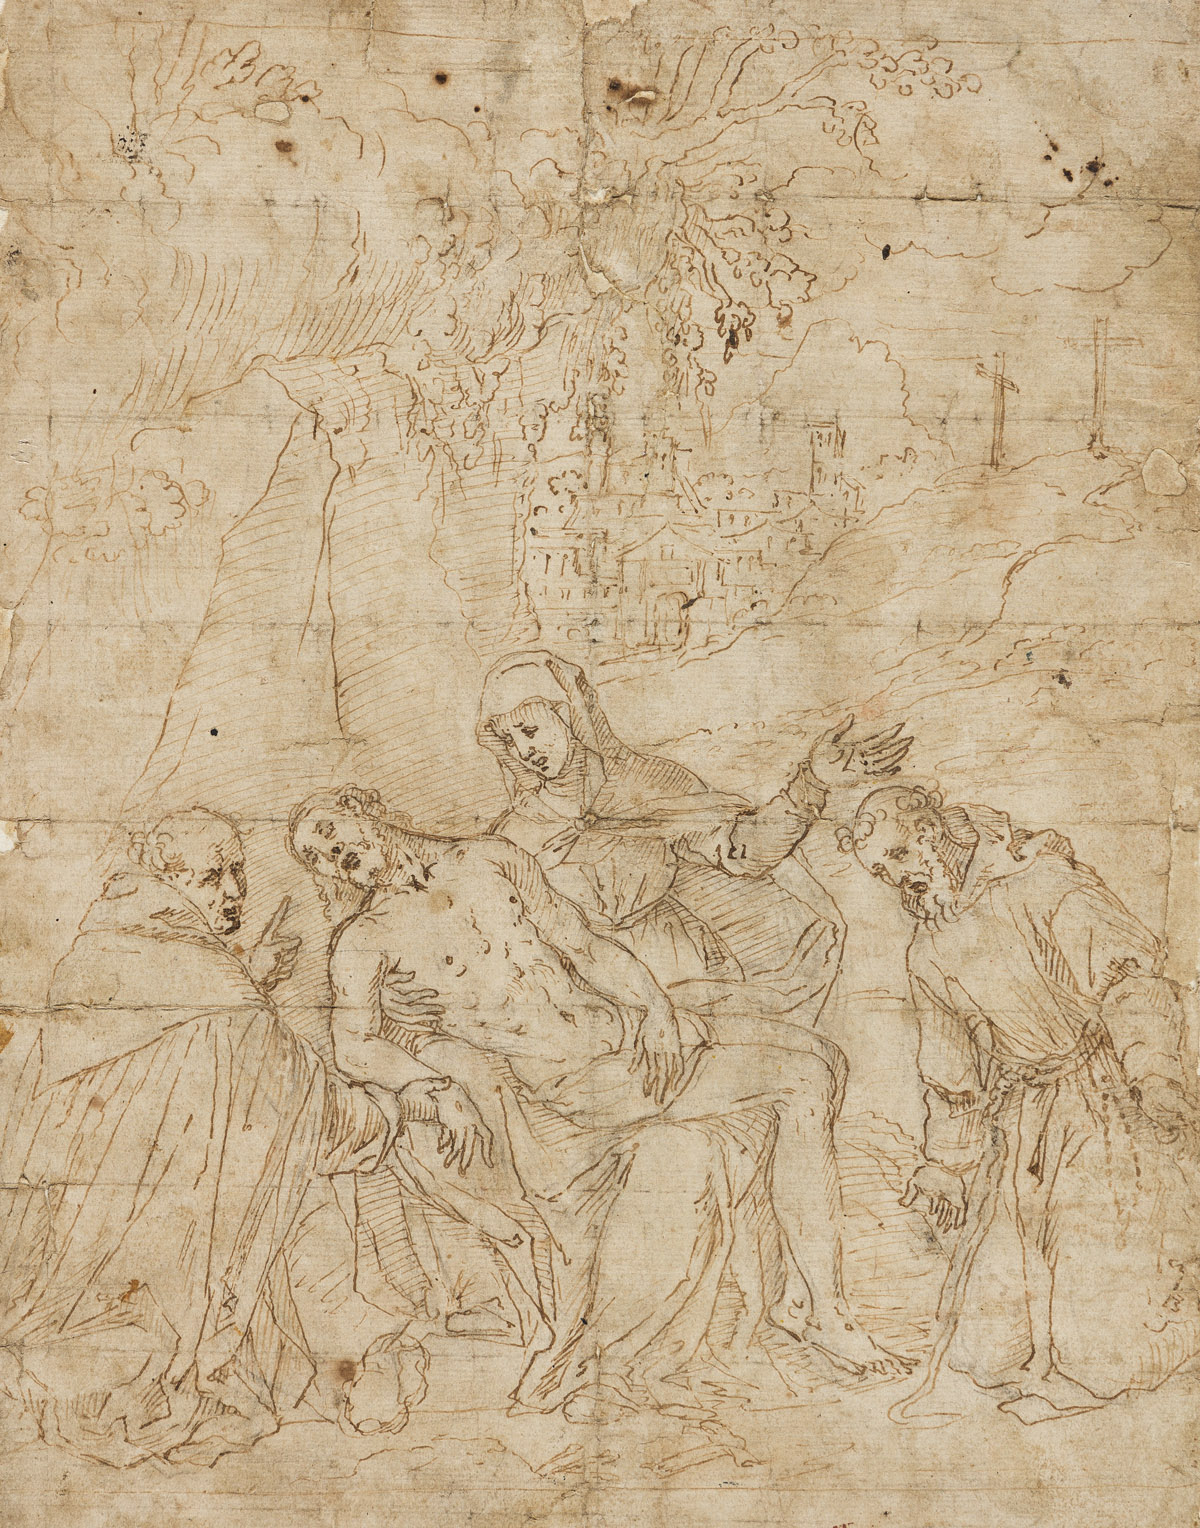 BARTOLOMEO PASSAROTTI (ATTRIBUTED TO) (Bologna 1529-1592 Rome) Pietà with Two Kneeling Monks in a Landscape.